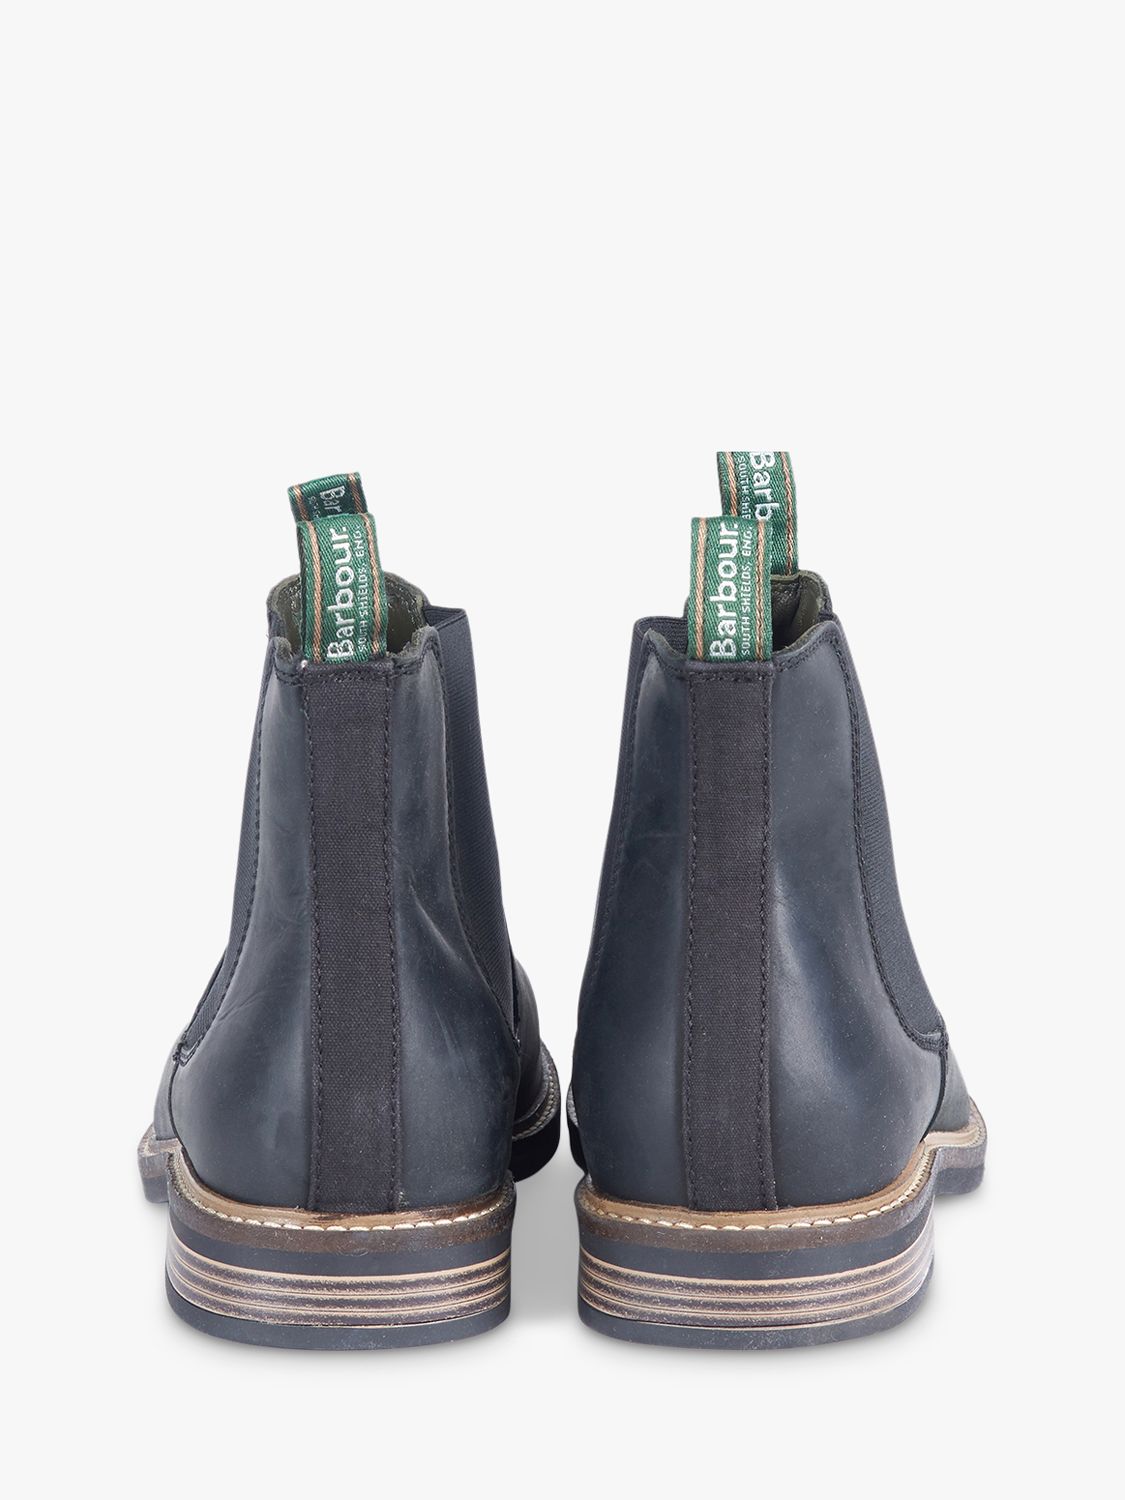 Barbour Farsley Slip On Boots, Black, 7